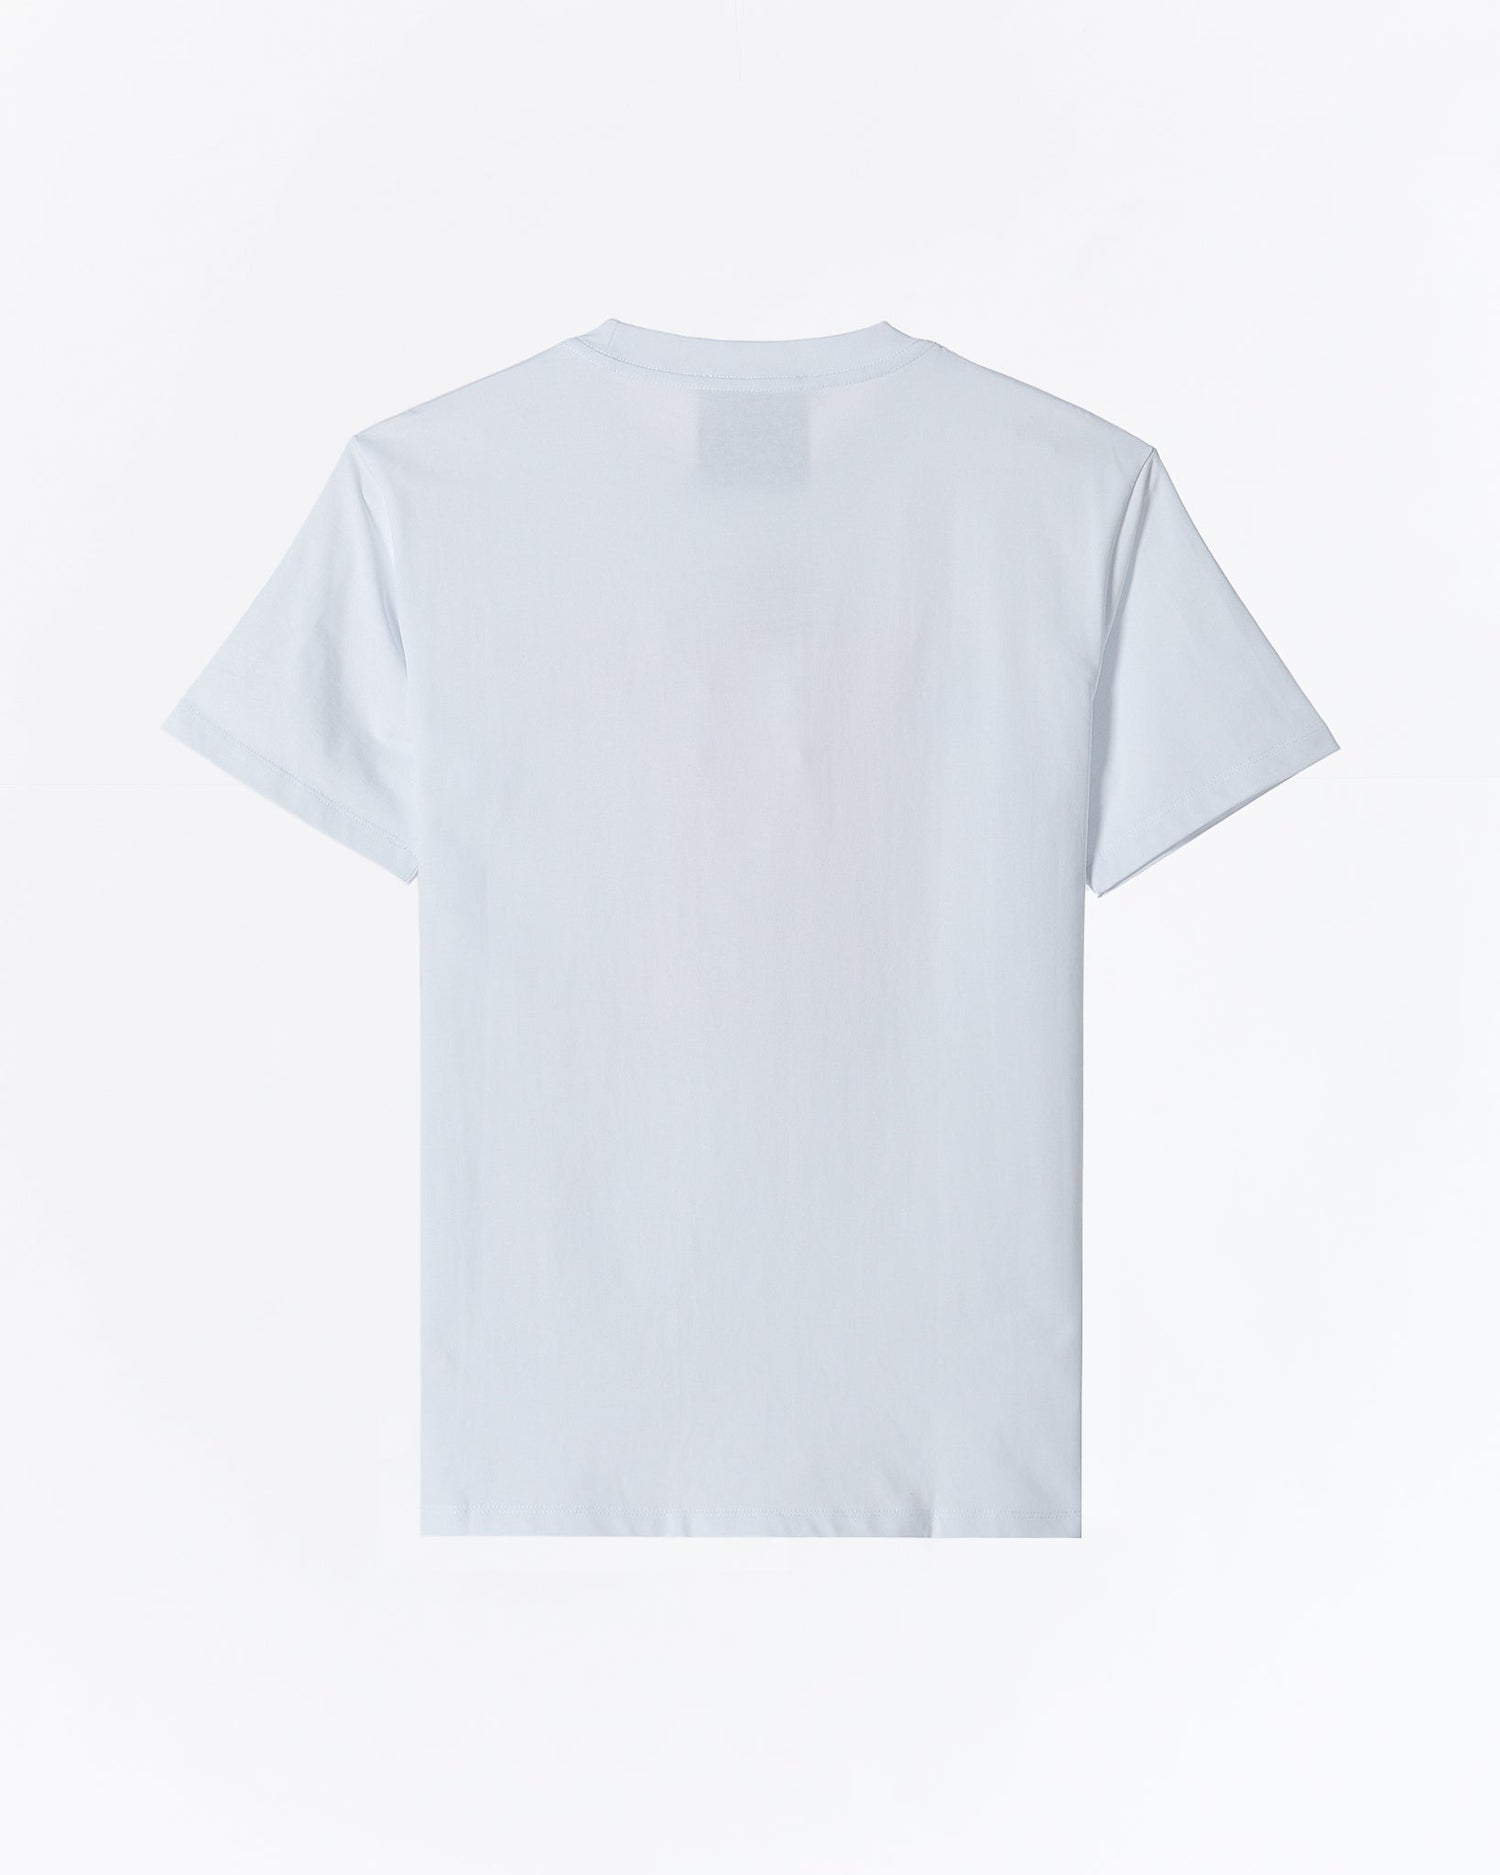 MOI OUTFIT-MOS Teddy Bear Unisex White T-Shirt 23.90